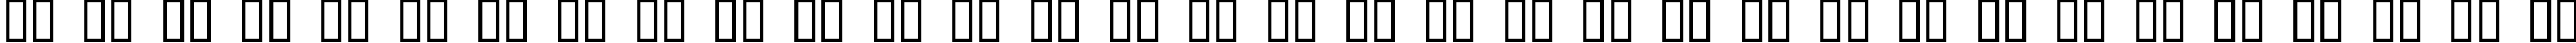 Пример написания русского алфавита шрифтом Klondike Bold